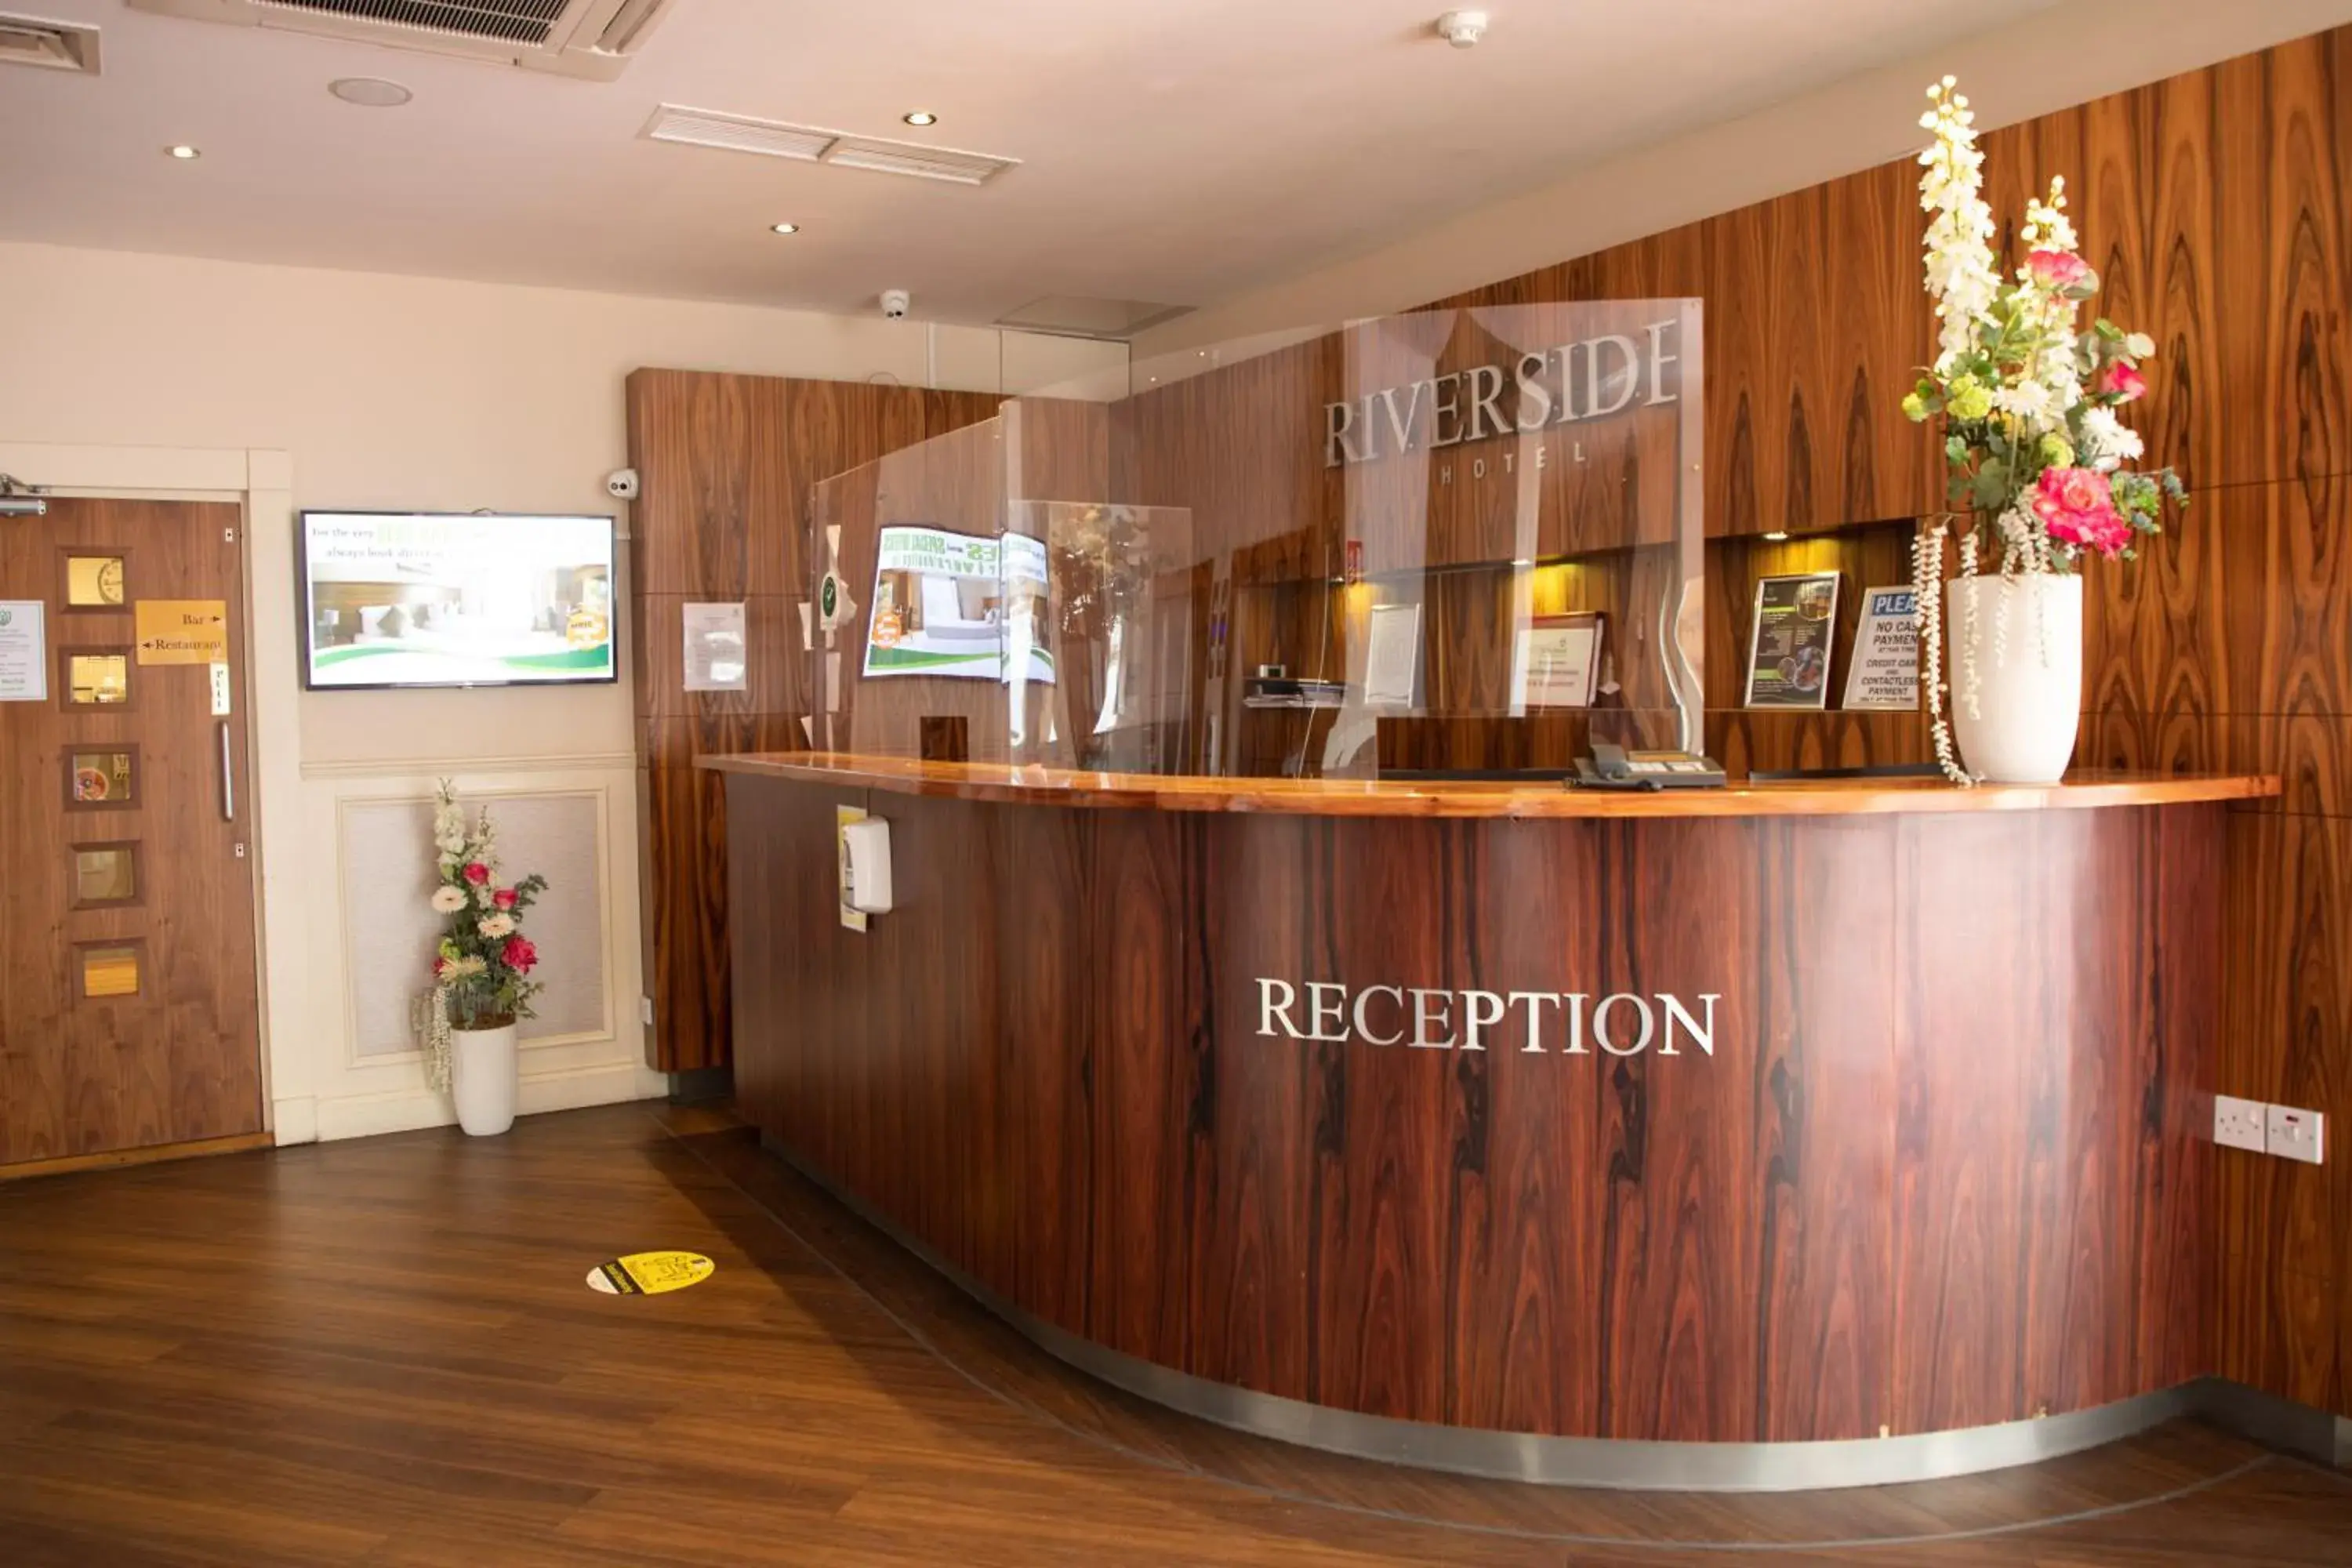 Lobby or reception in Riverside Hotel